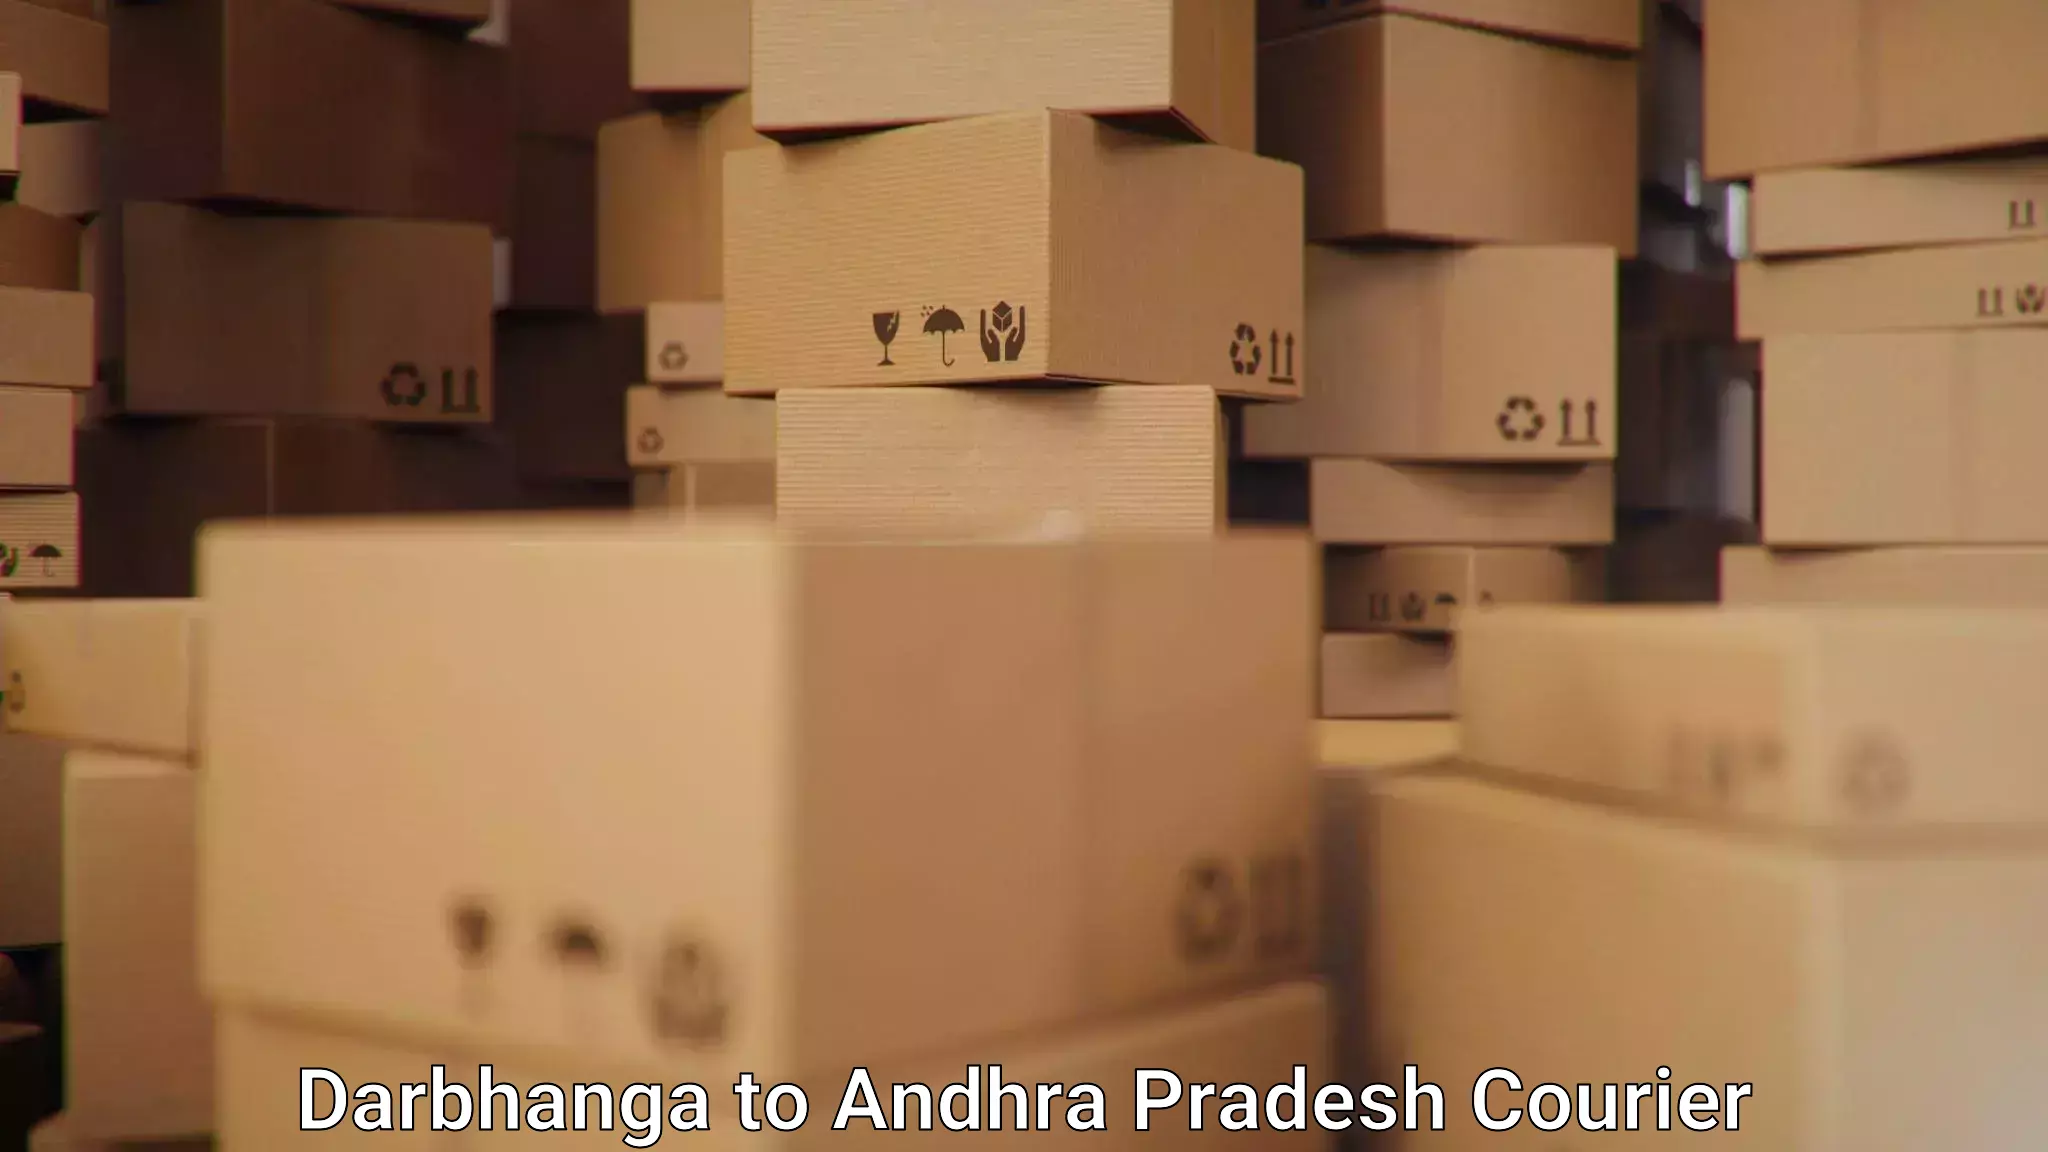 Courier service booking Darbhanga to Andhra Pradesh